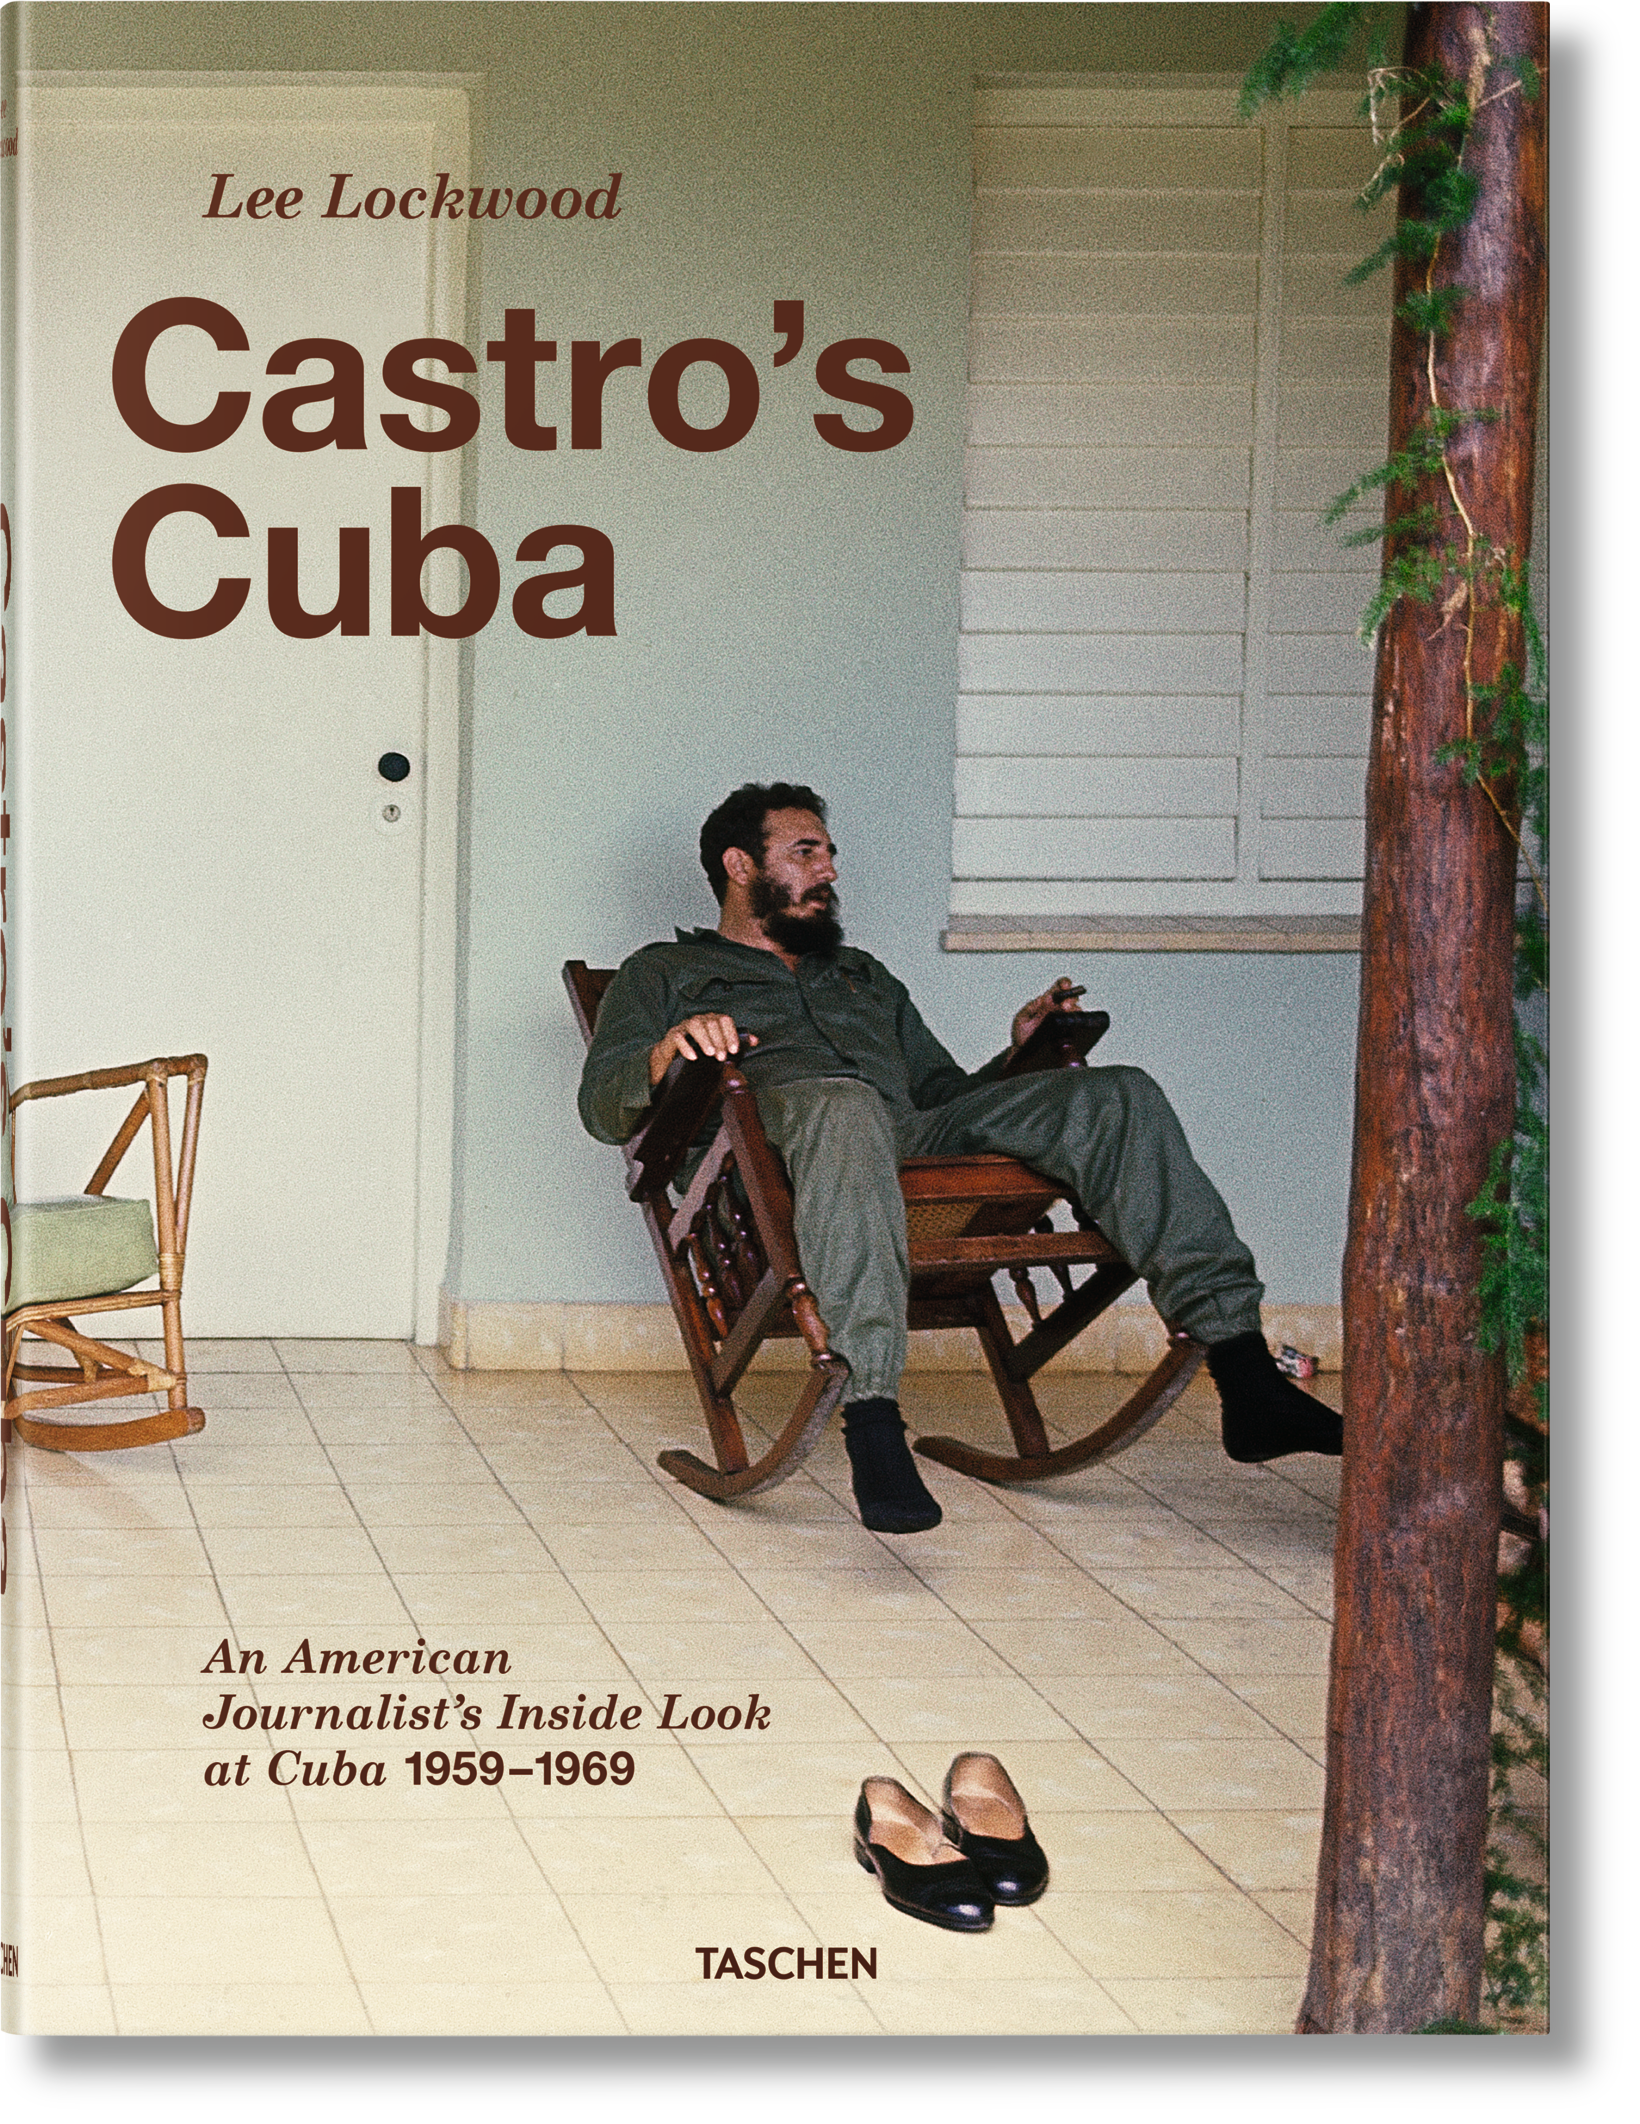 Inside Fidel Castro's luxurious life on his secret island getaway